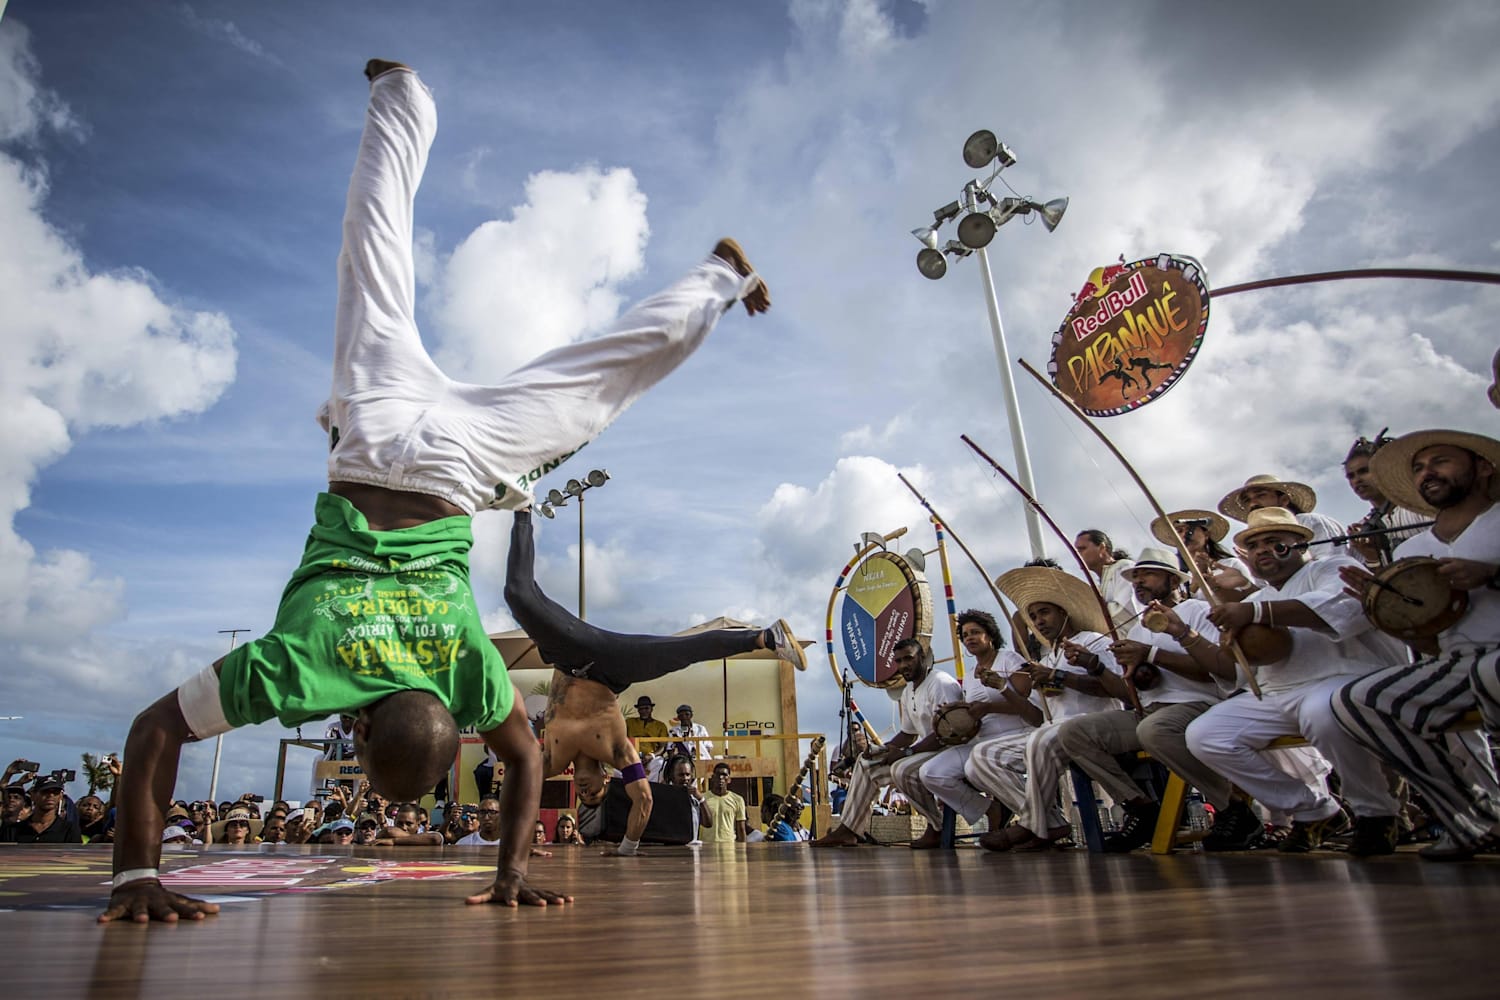 Danny welbeck and daniel sturridge show off capoeira skills in brazilian favela